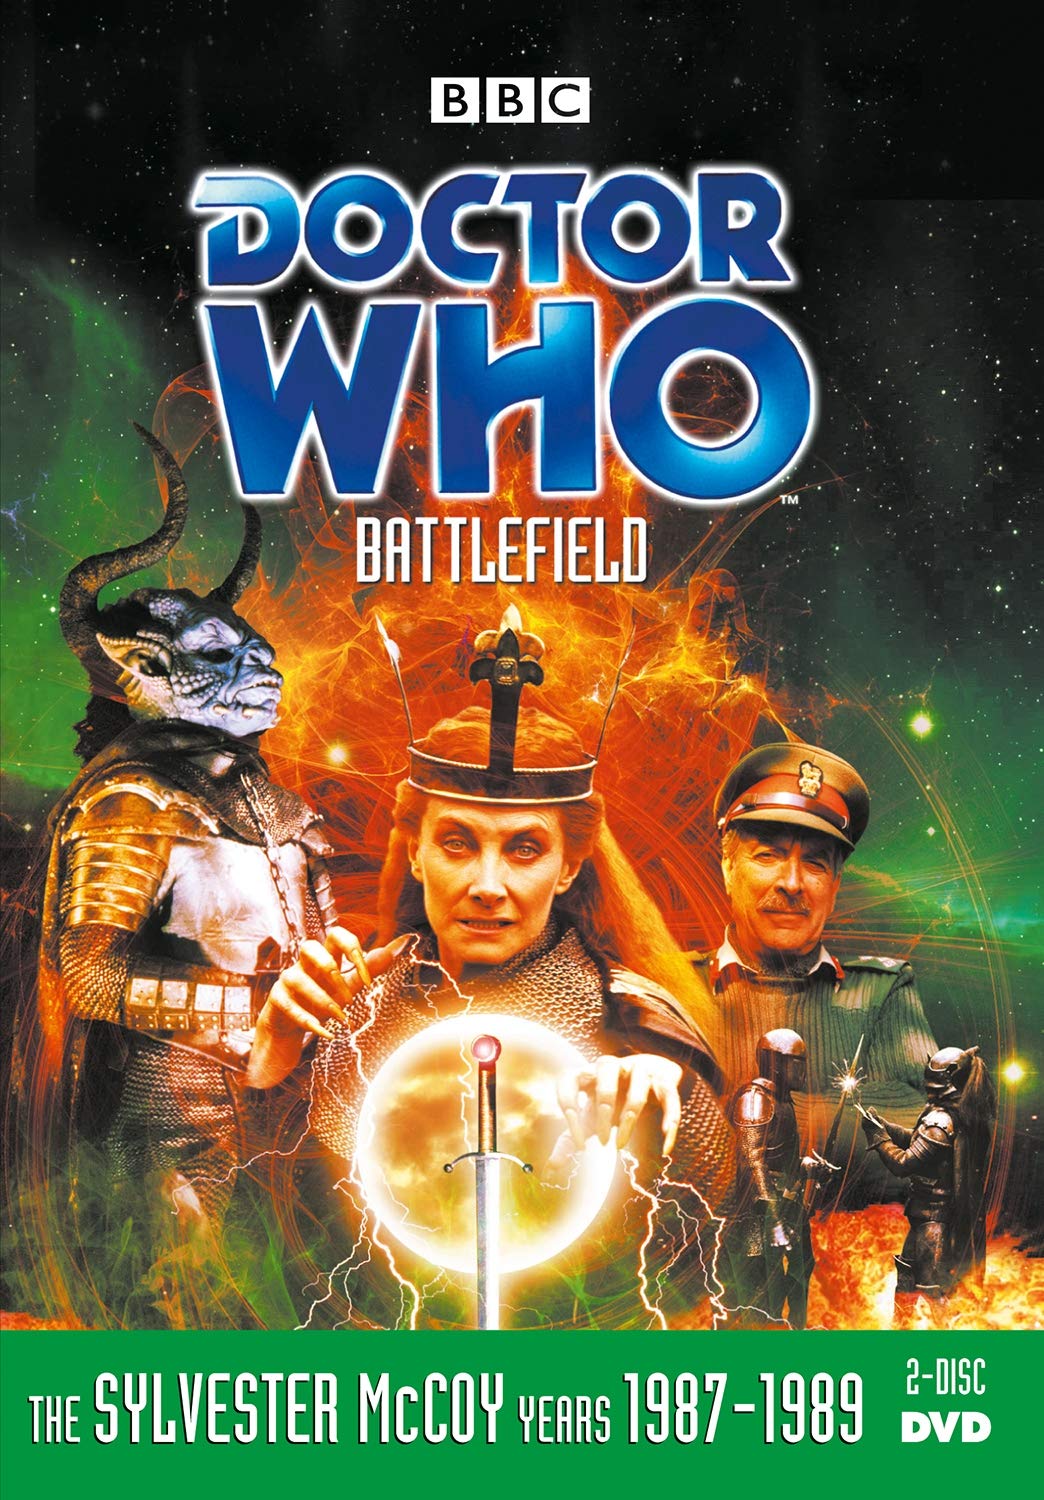 Doctor Who: Battlefield (1989) starring Sylvester McCoy, Sophie Aldred, Nicholas Courtney